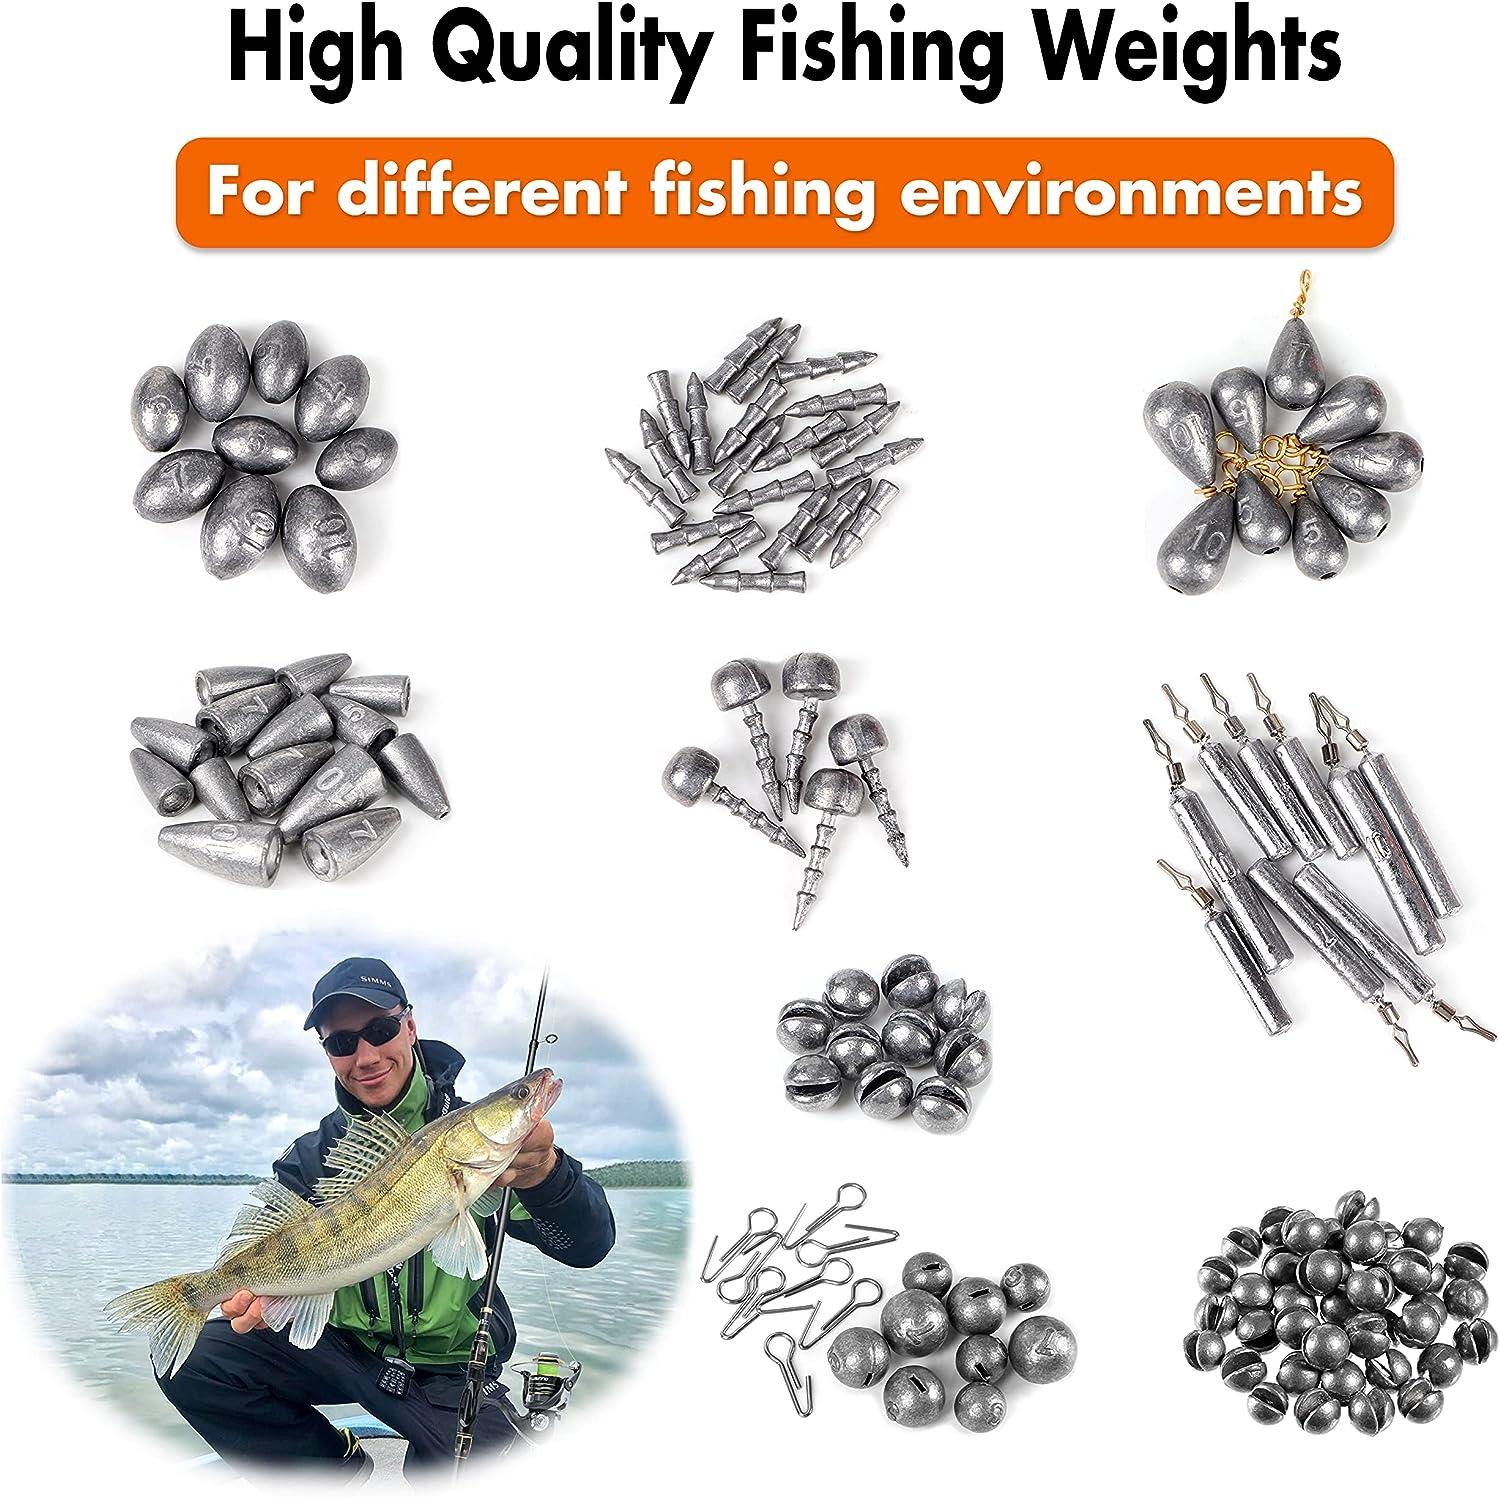 PLUSINNO 264/397pcs Fishing Accessories Kit, Organized Fishing